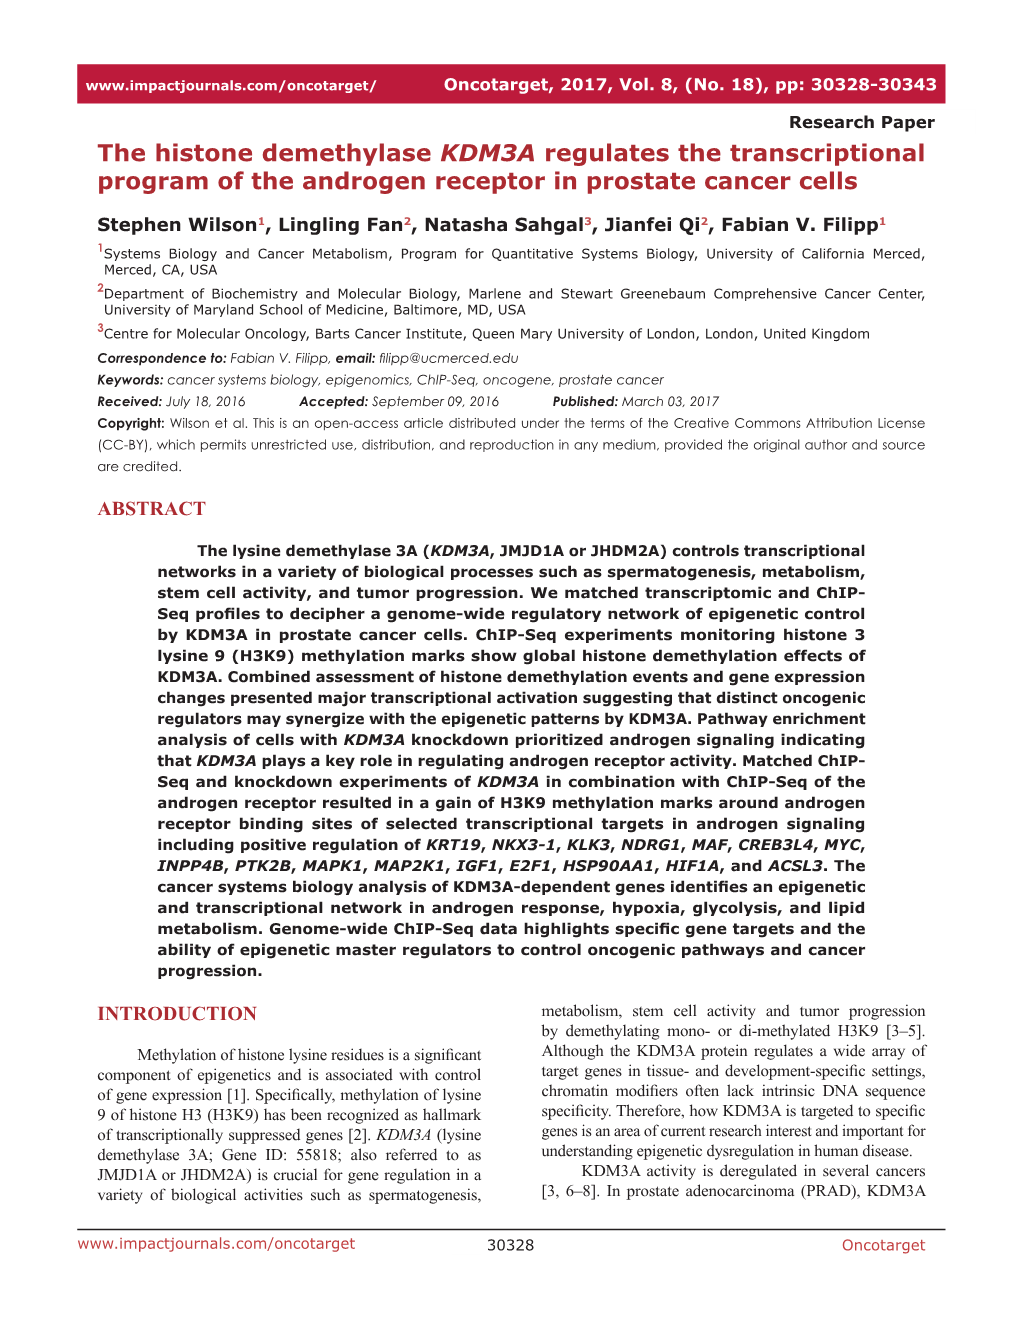 The Histone Demethylase KDM3A Regulates the Transcriptional Program of the Androgen Receptor in Prostate Cancer Cells